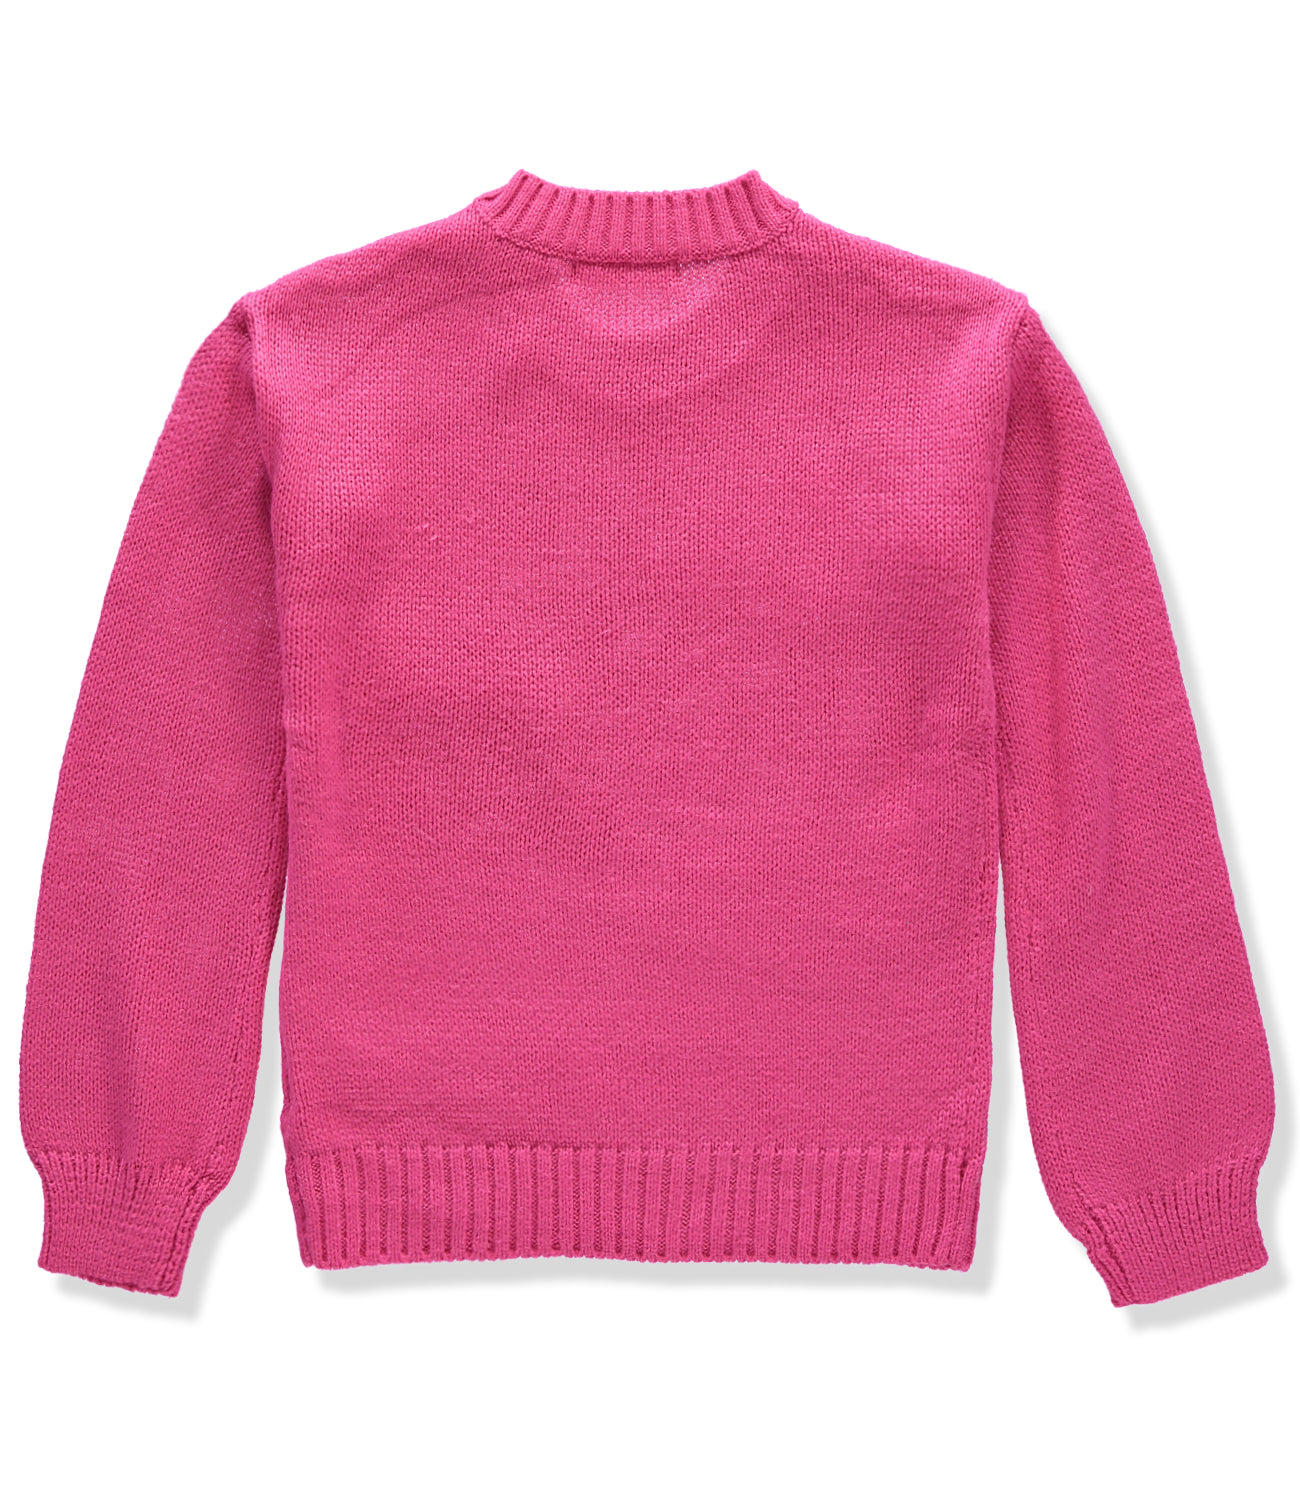 Full Circle Girls 7-16 Cloud Jacquard Knit Sweater